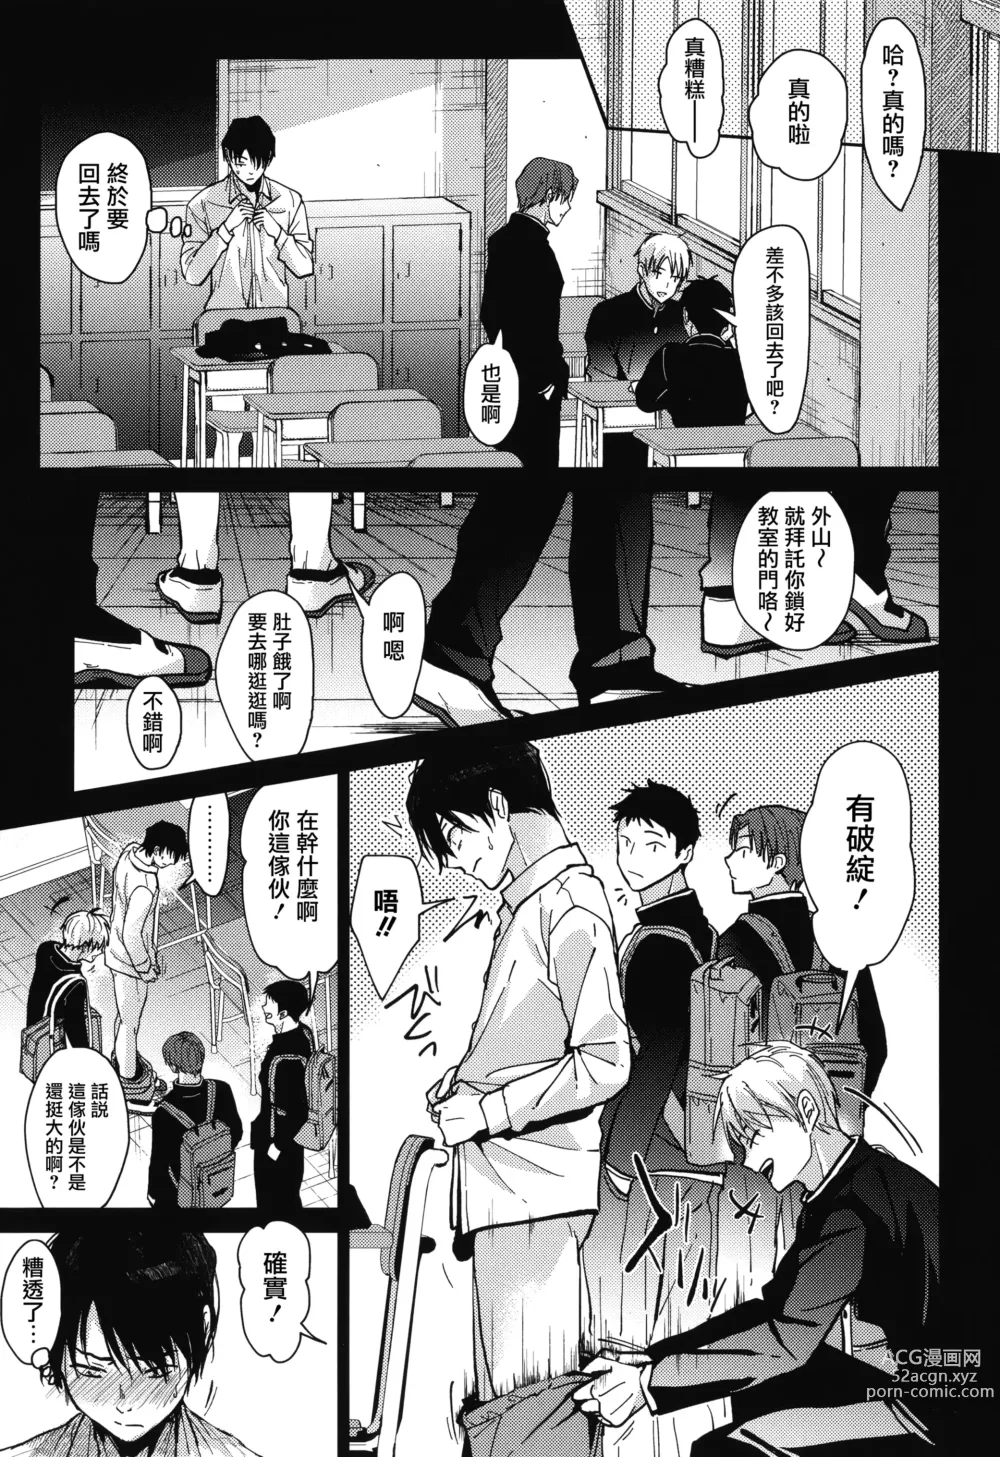 Page 7 of manga Amami + Toranoana Kounyuu Tokuten 4P Leaflet